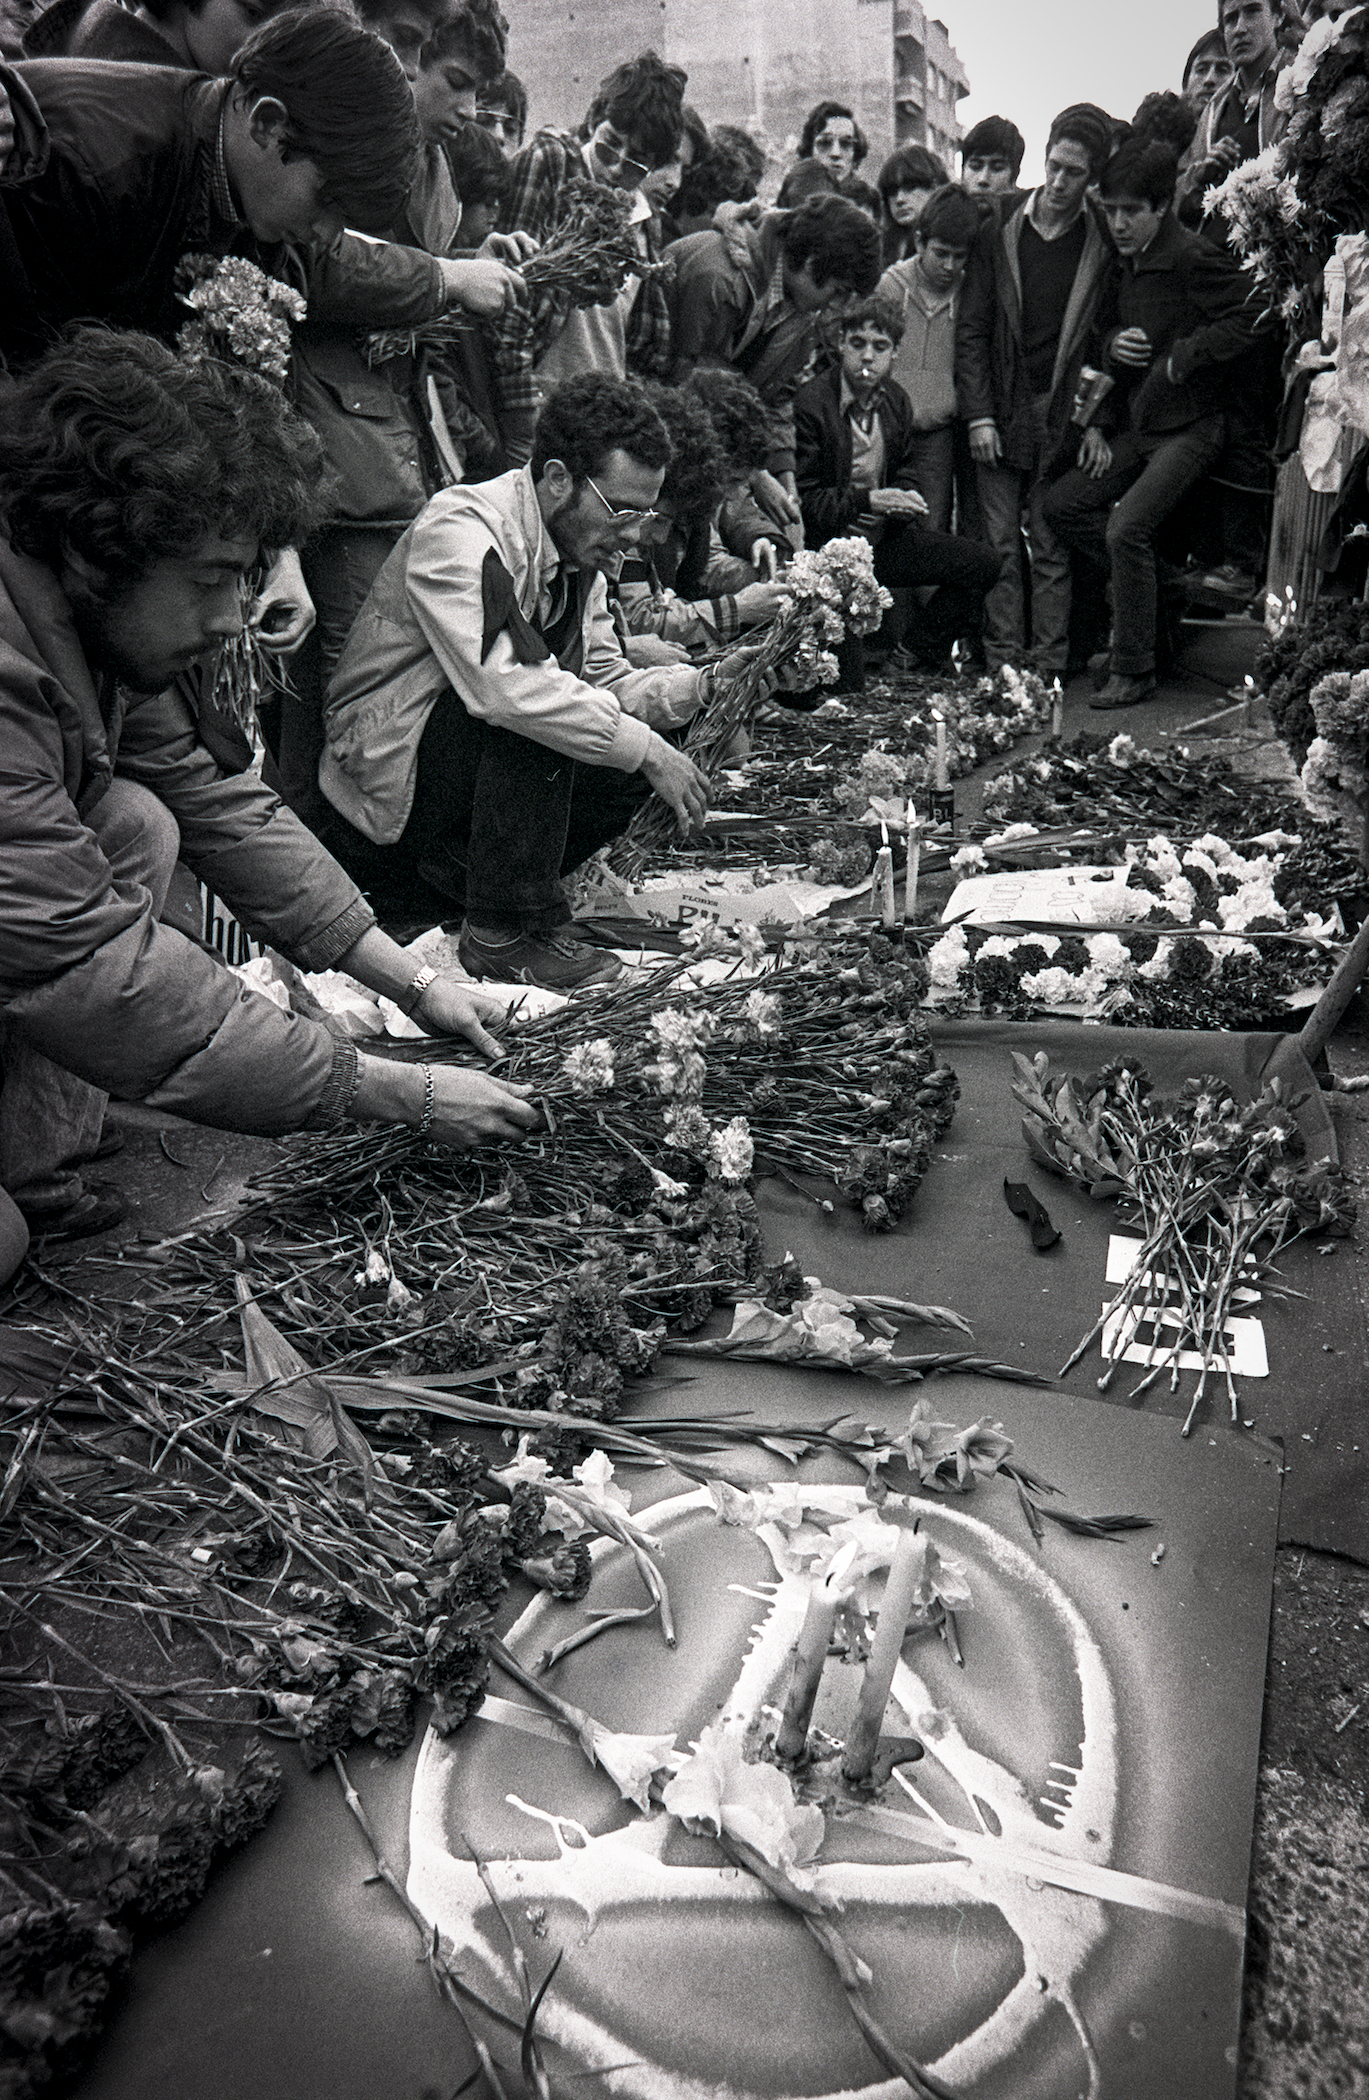 óvenes ponen velas por la muerte por disparos de la policía de dos estudiantes (Bernardo Pérez, 1979)